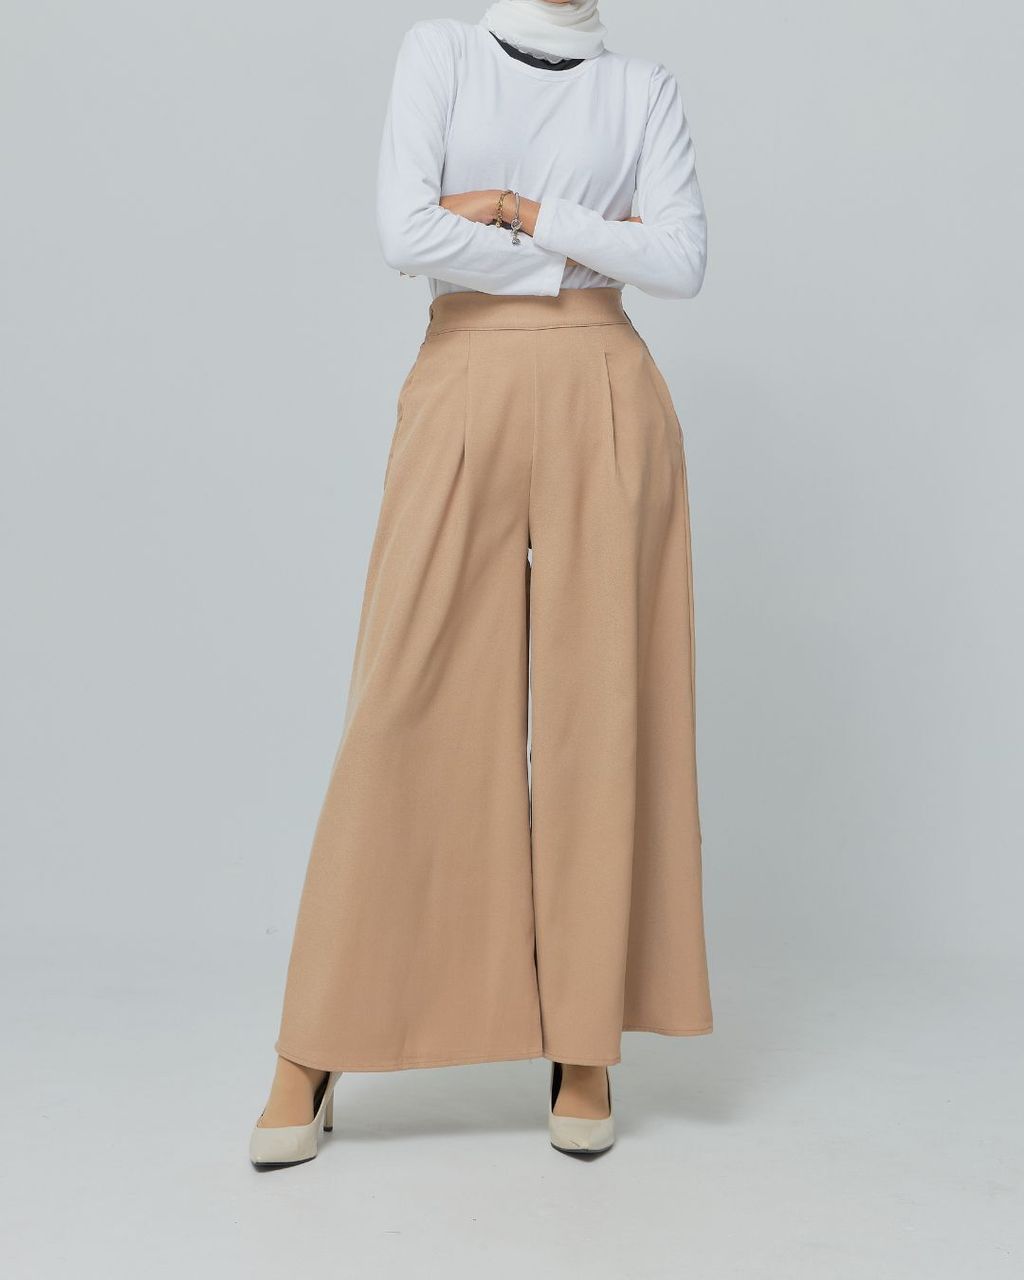 haura-wear-rhea-mix-cotton-skirt-high-waist-cotton-long-pants-seluar-muslimah-seluar-perempuan-palazzo-pants-sluar-skirt (11)